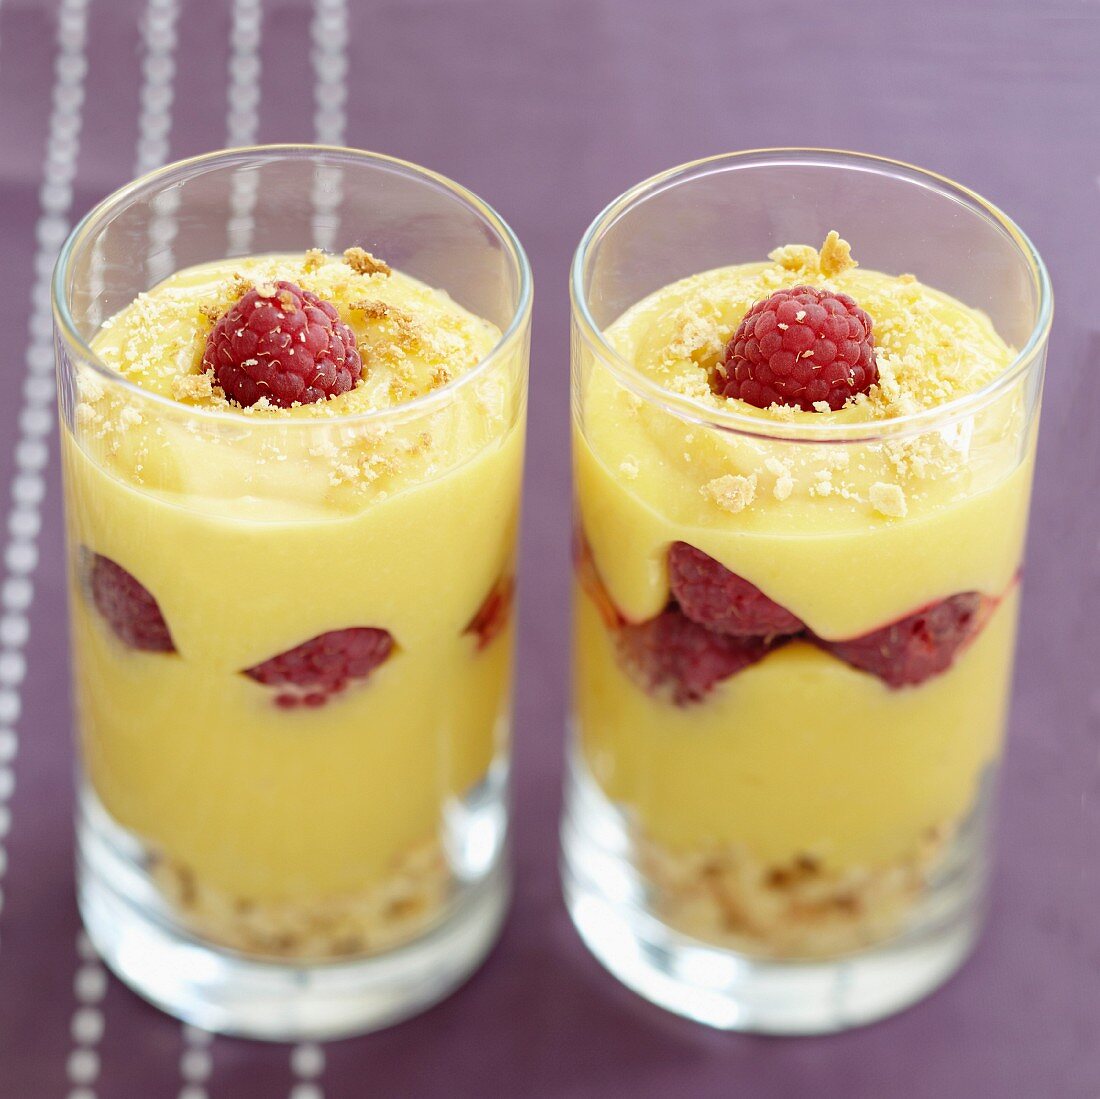 Lemon cream dessert with raspberries